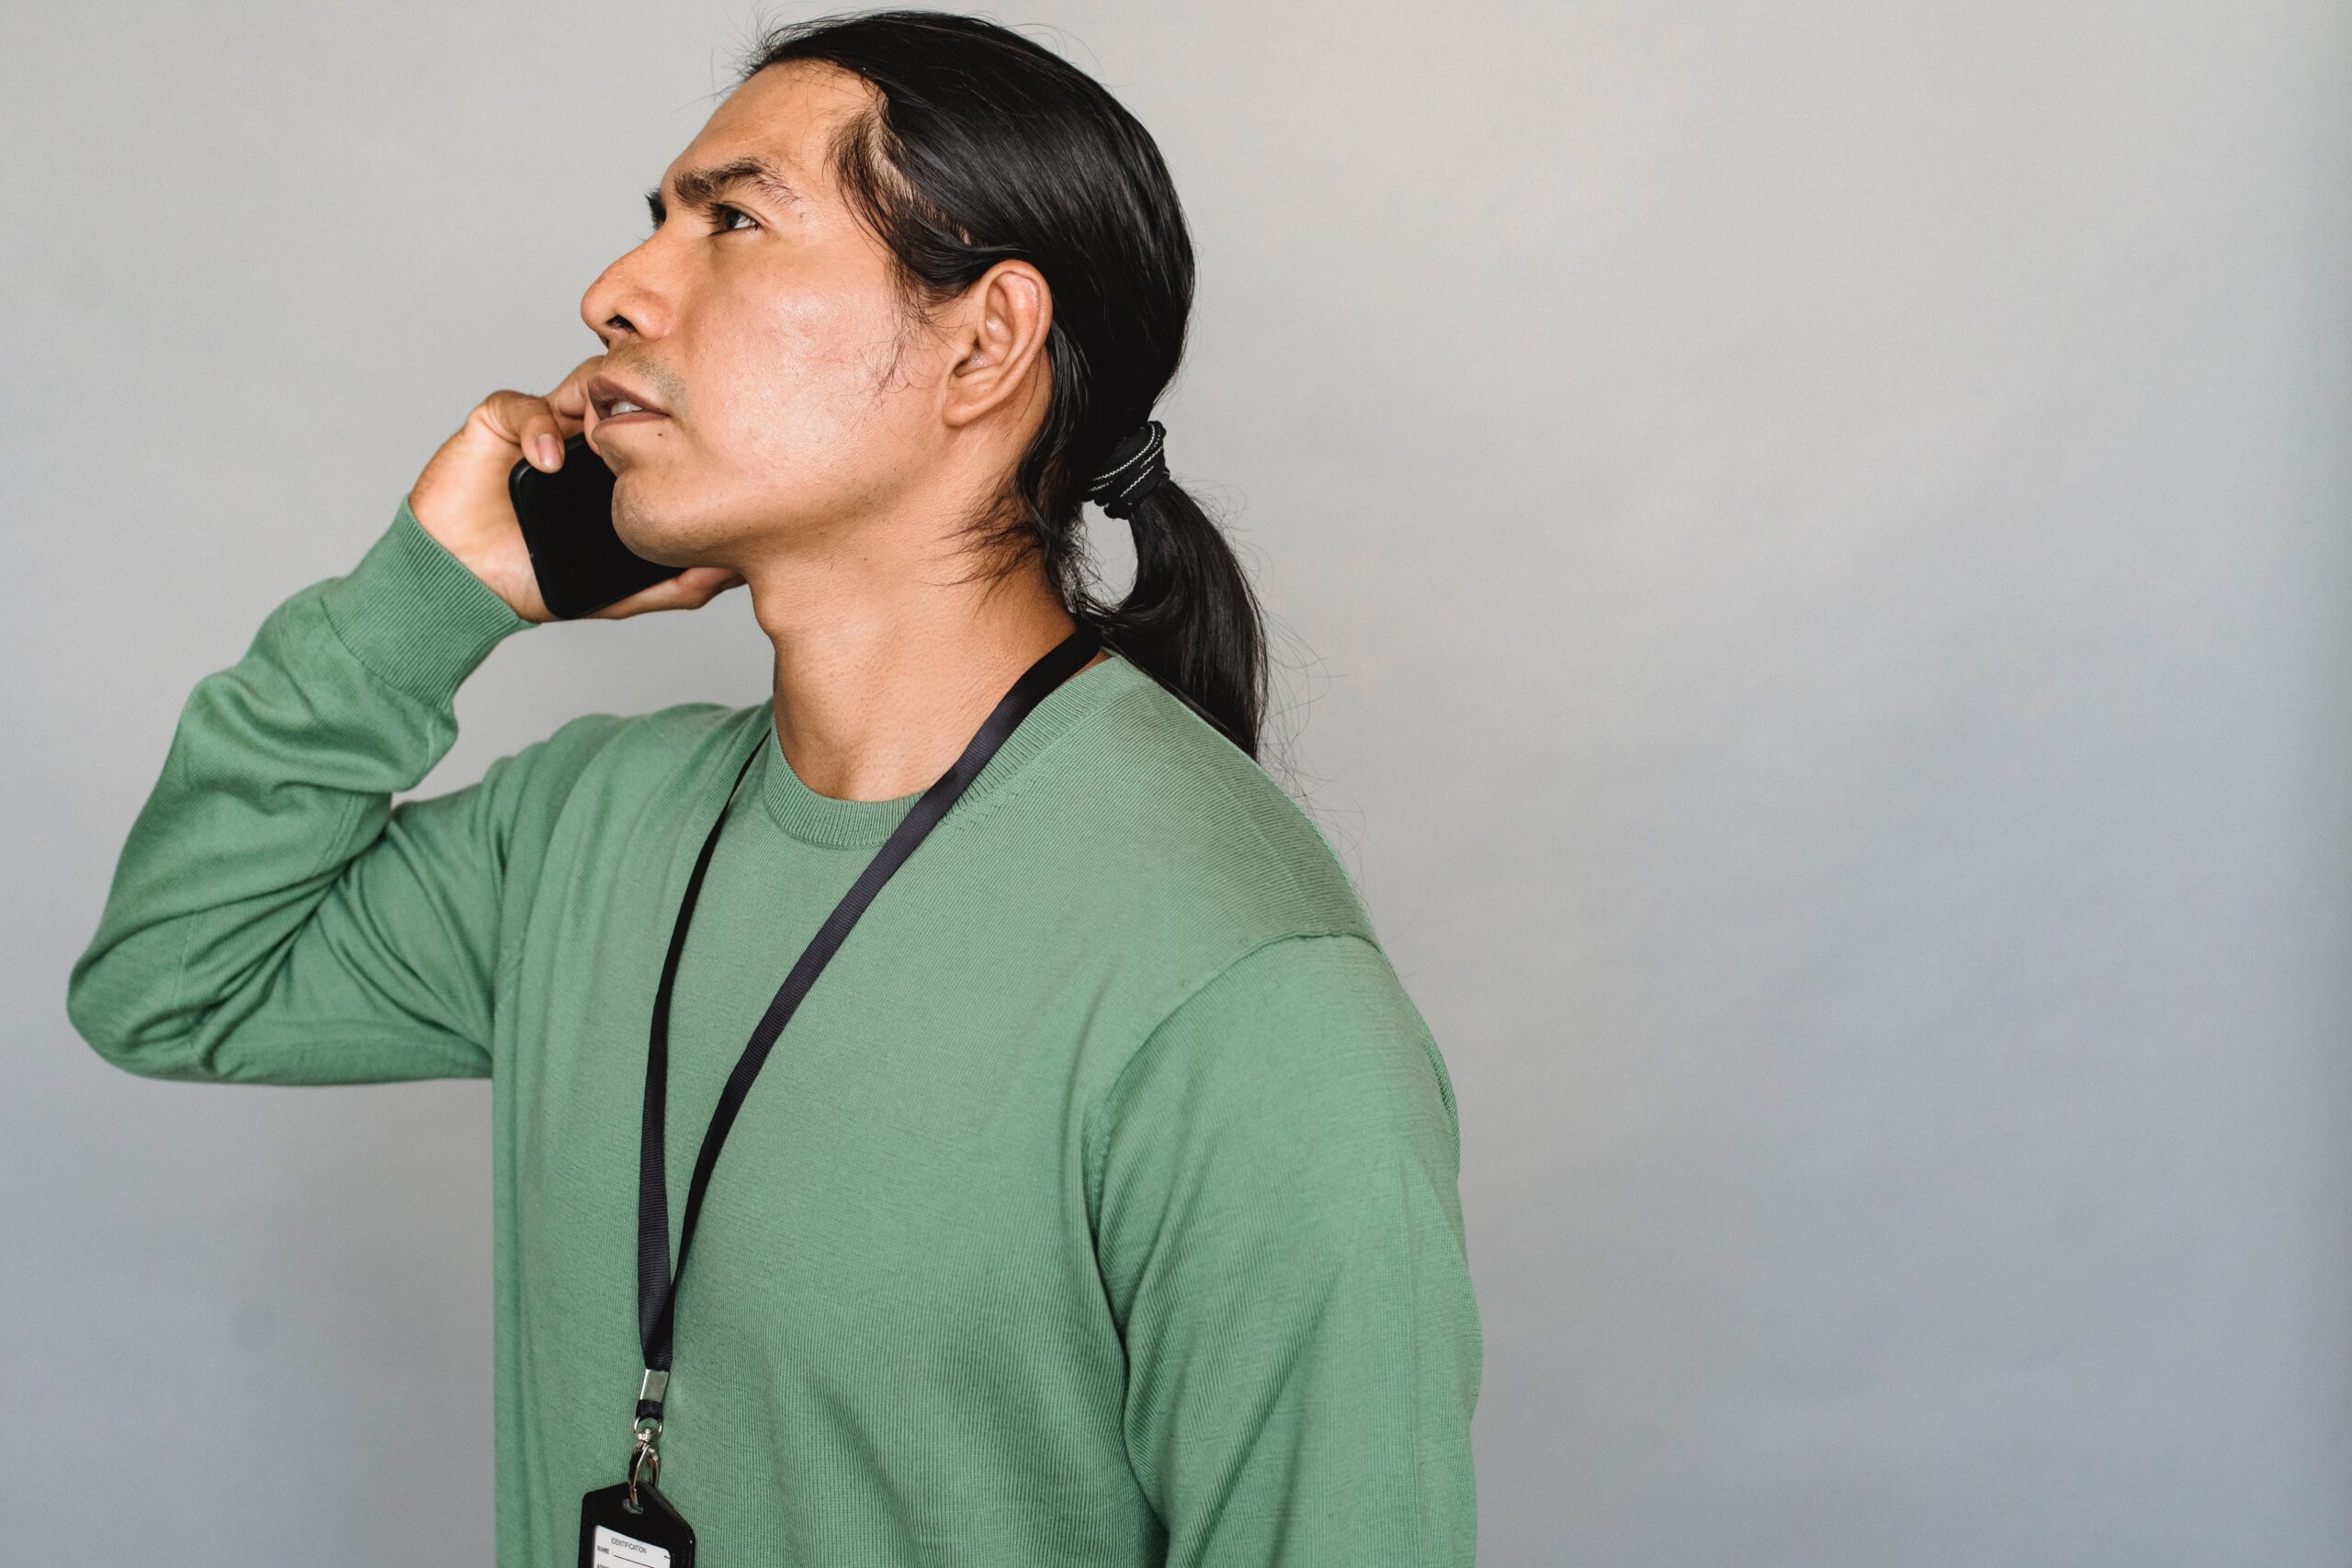 Native American man on phone